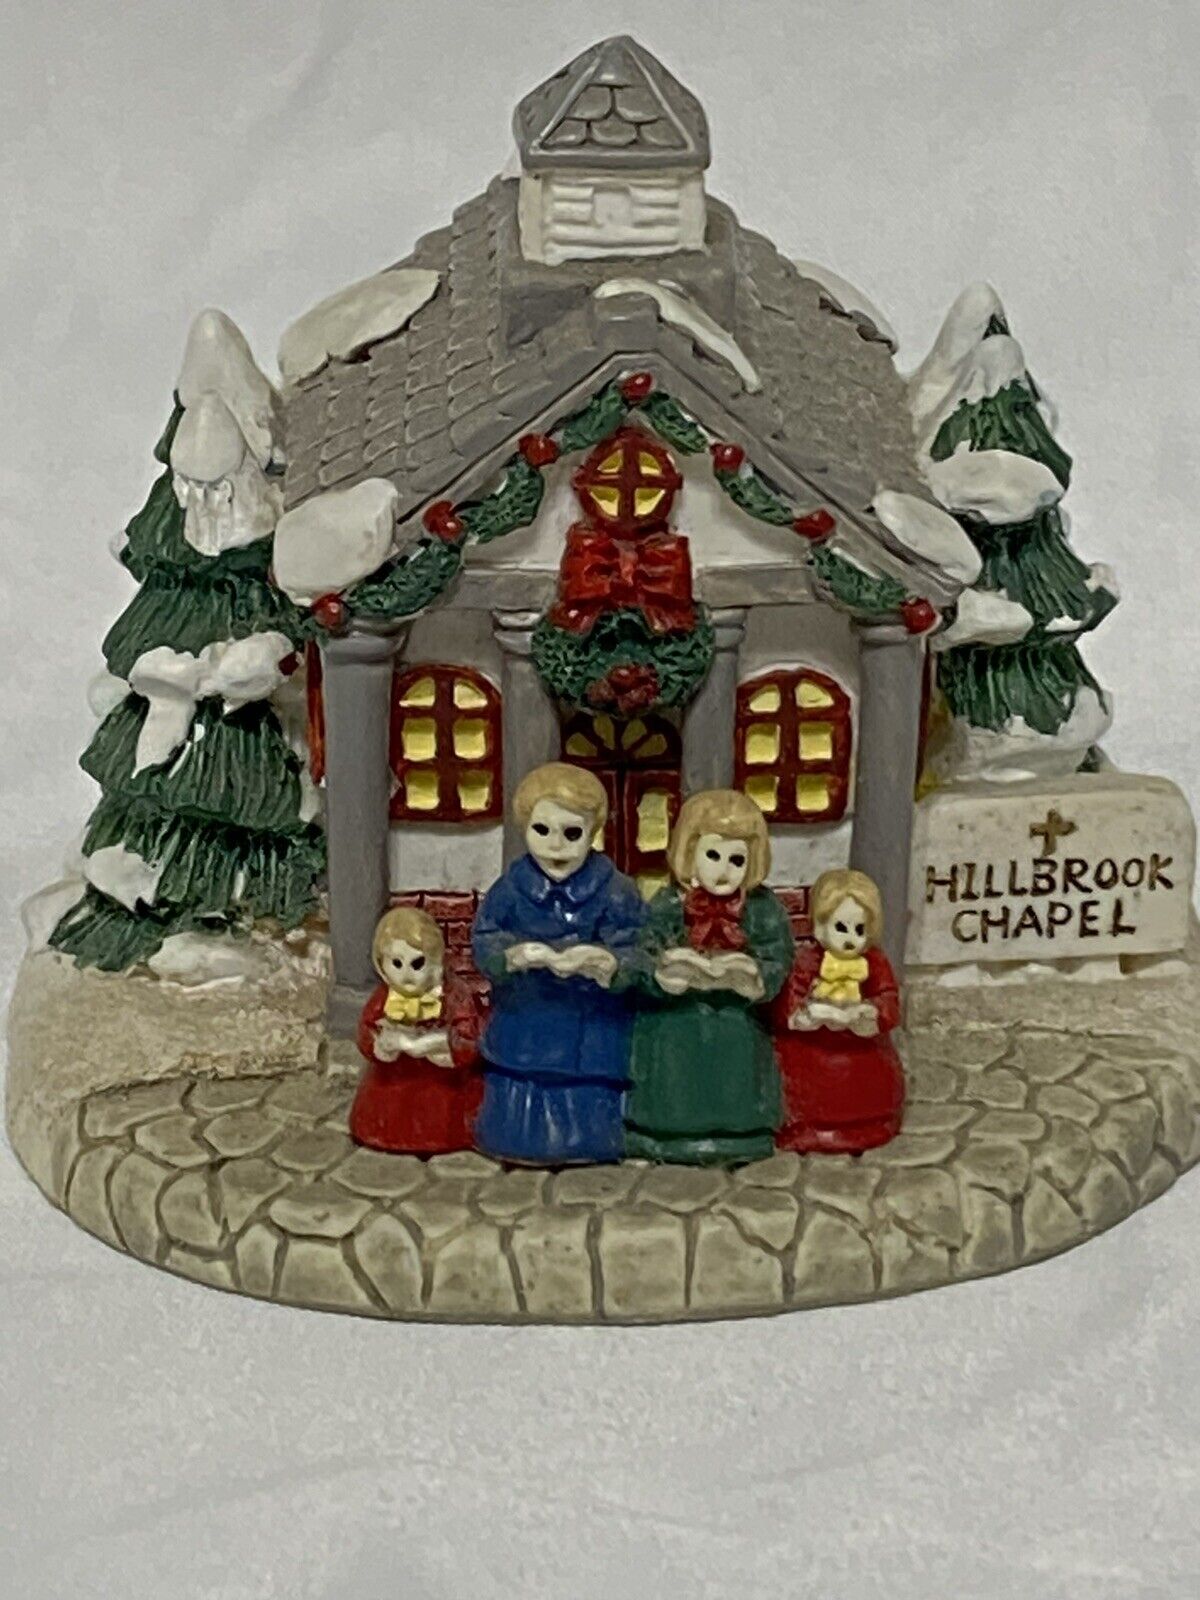 1993 Crystal Falls Village Mini Christmas Village Hillbrook Chapel 2.5”